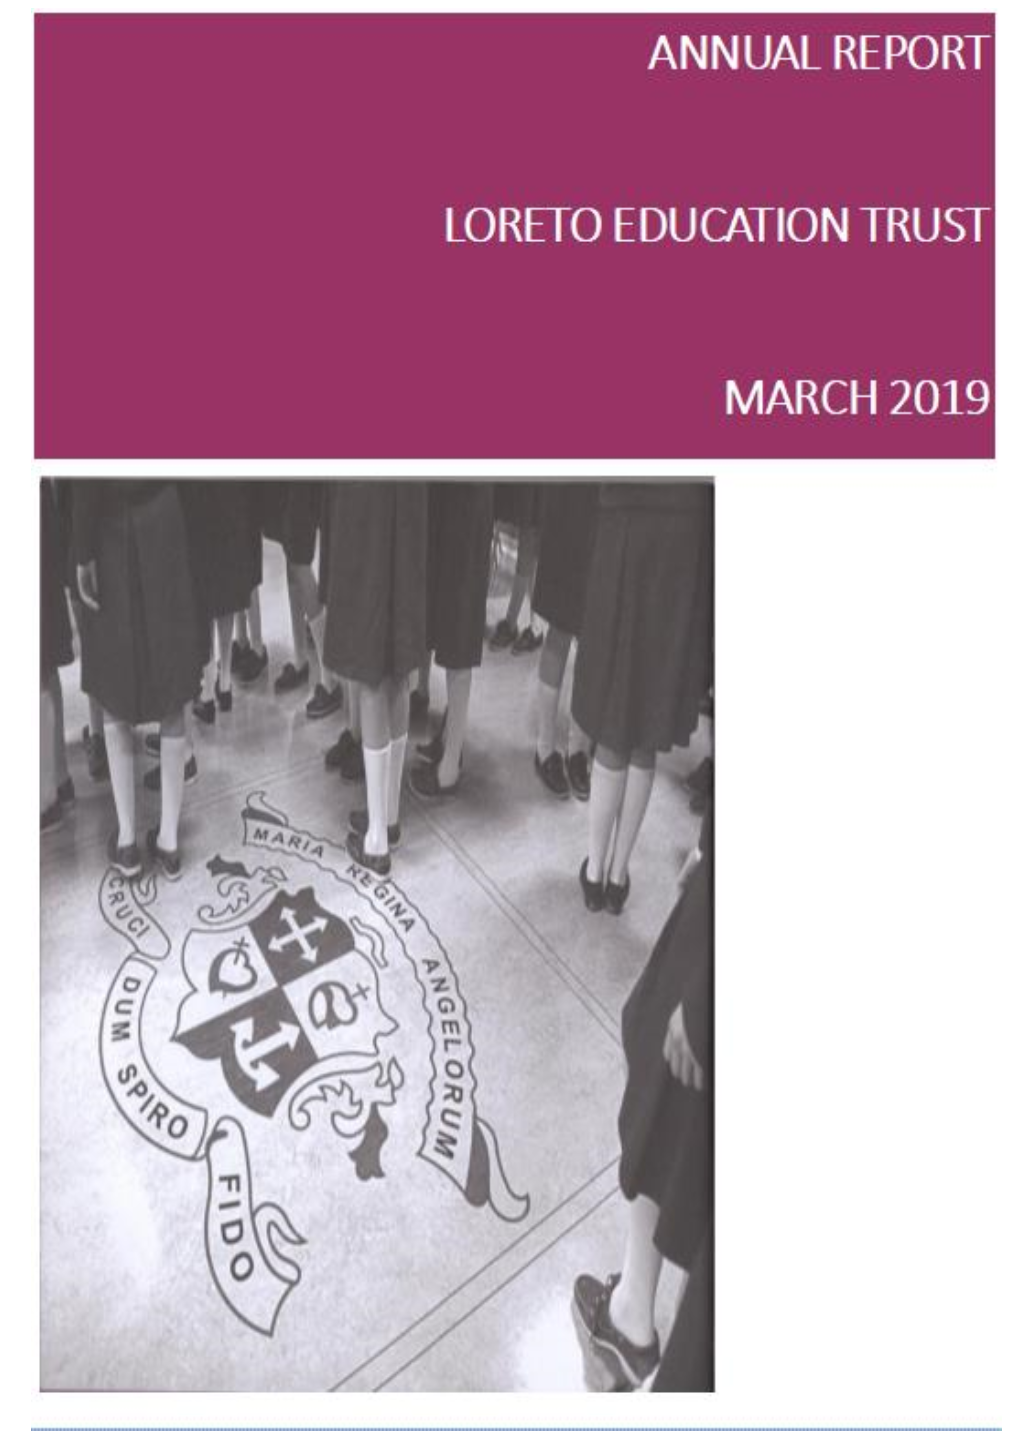 Annual Report March 2019